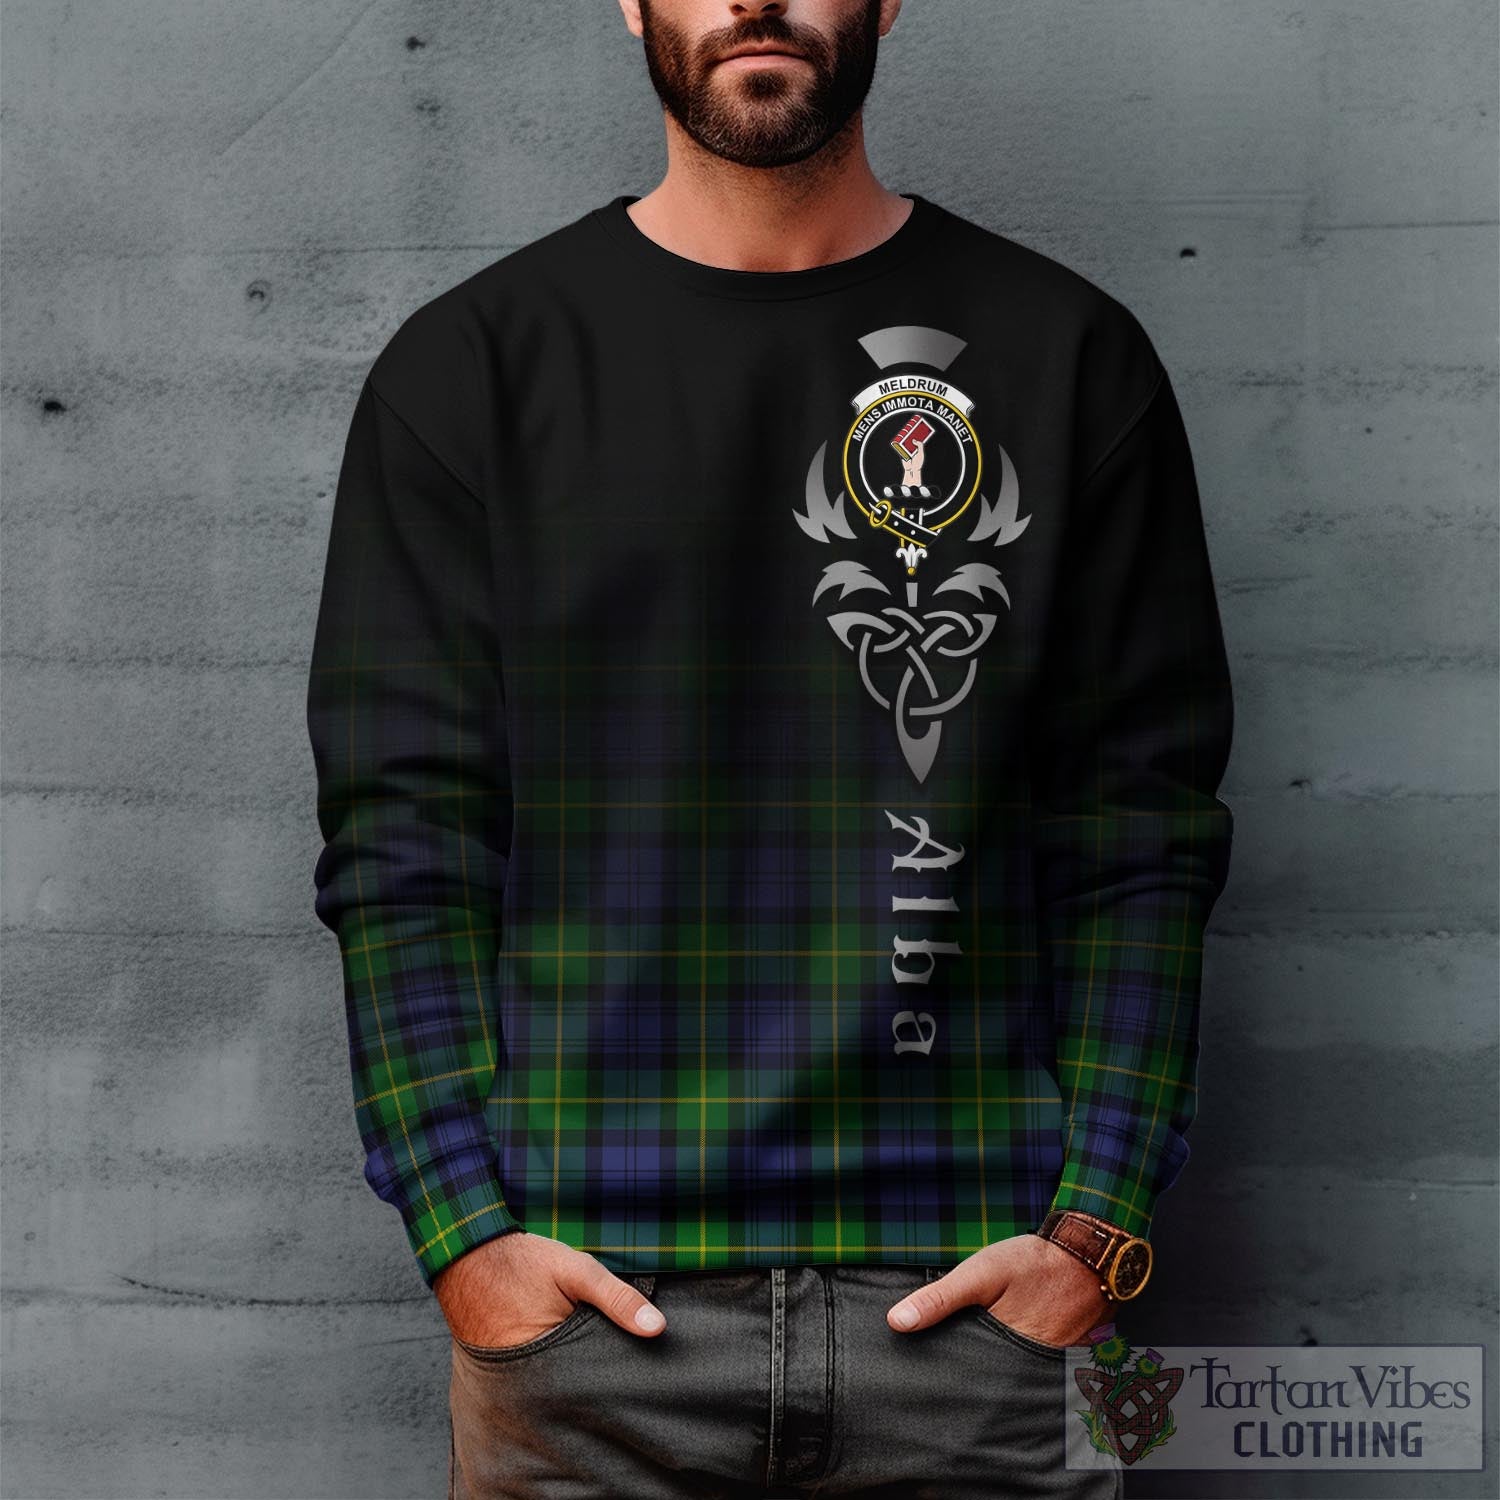 Tartan Vibes Clothing Meldrum Tartan Sweatshirt Featuring Alba Gu Brath Family Crest Celtic Inspired